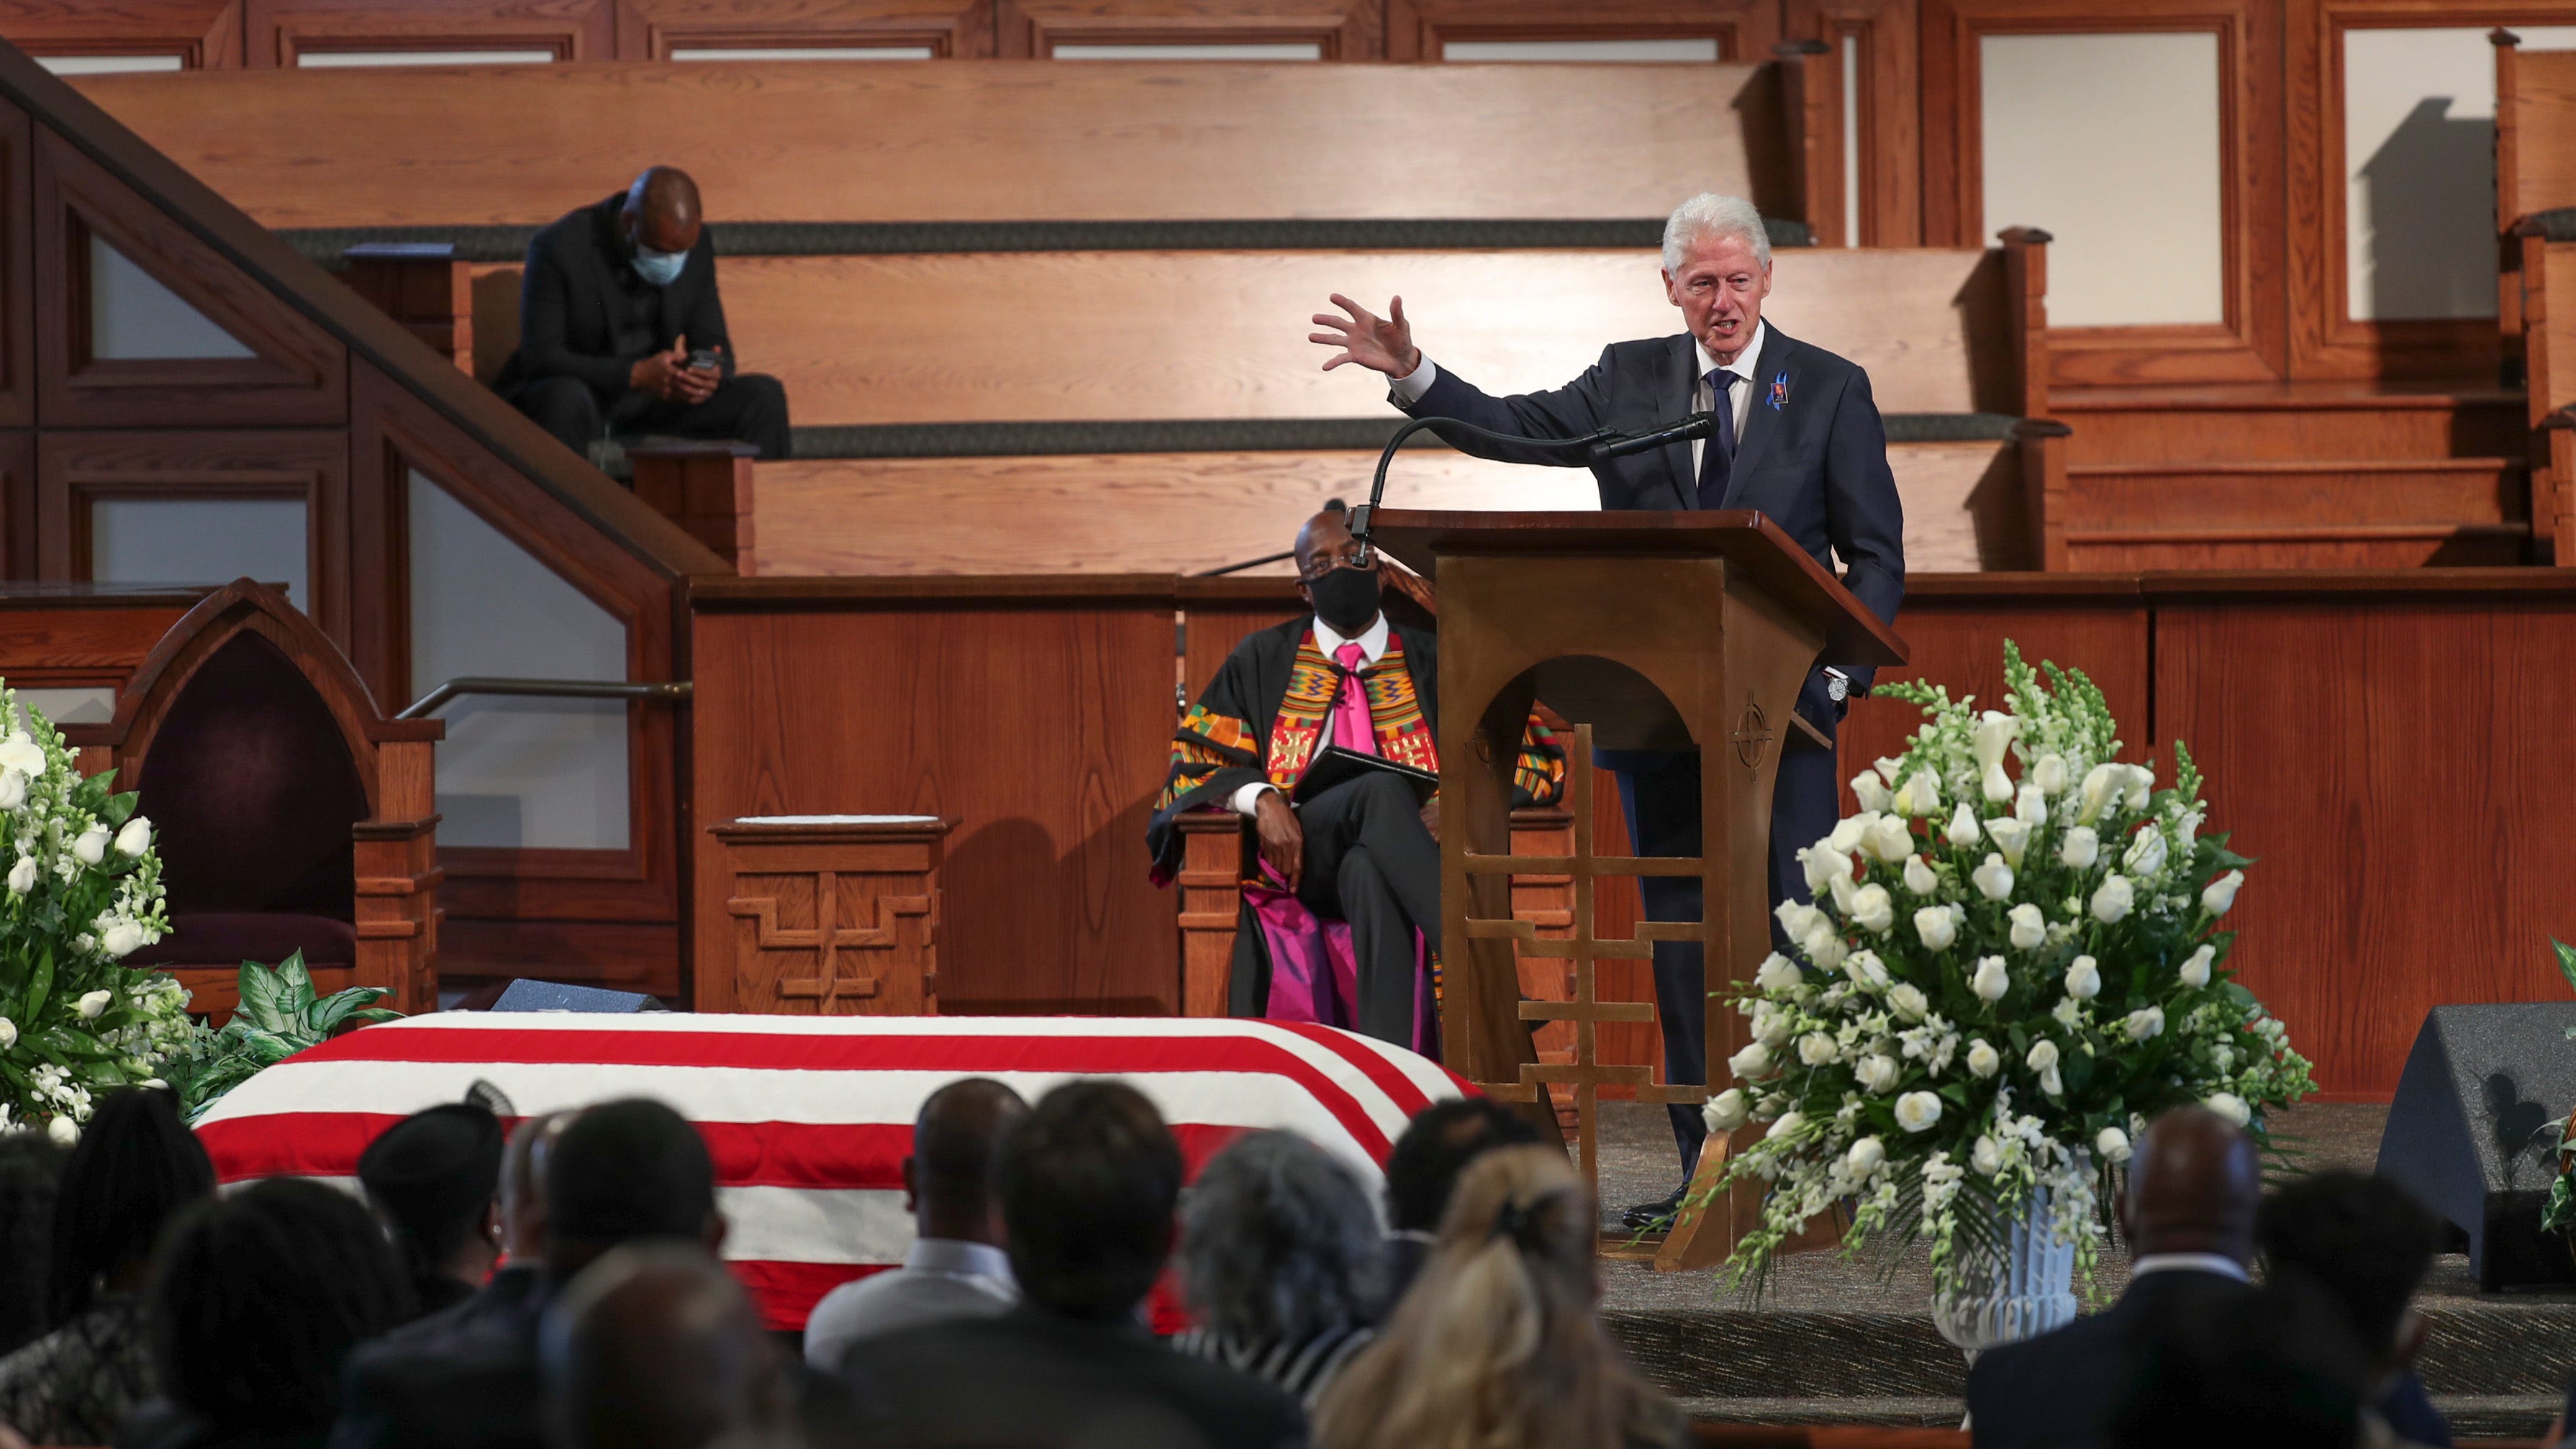 Похорони президента. Джордж Буш старший похороны. Похороны президента США Джорджа Буша. Три президента Обама Буш Клинтон.